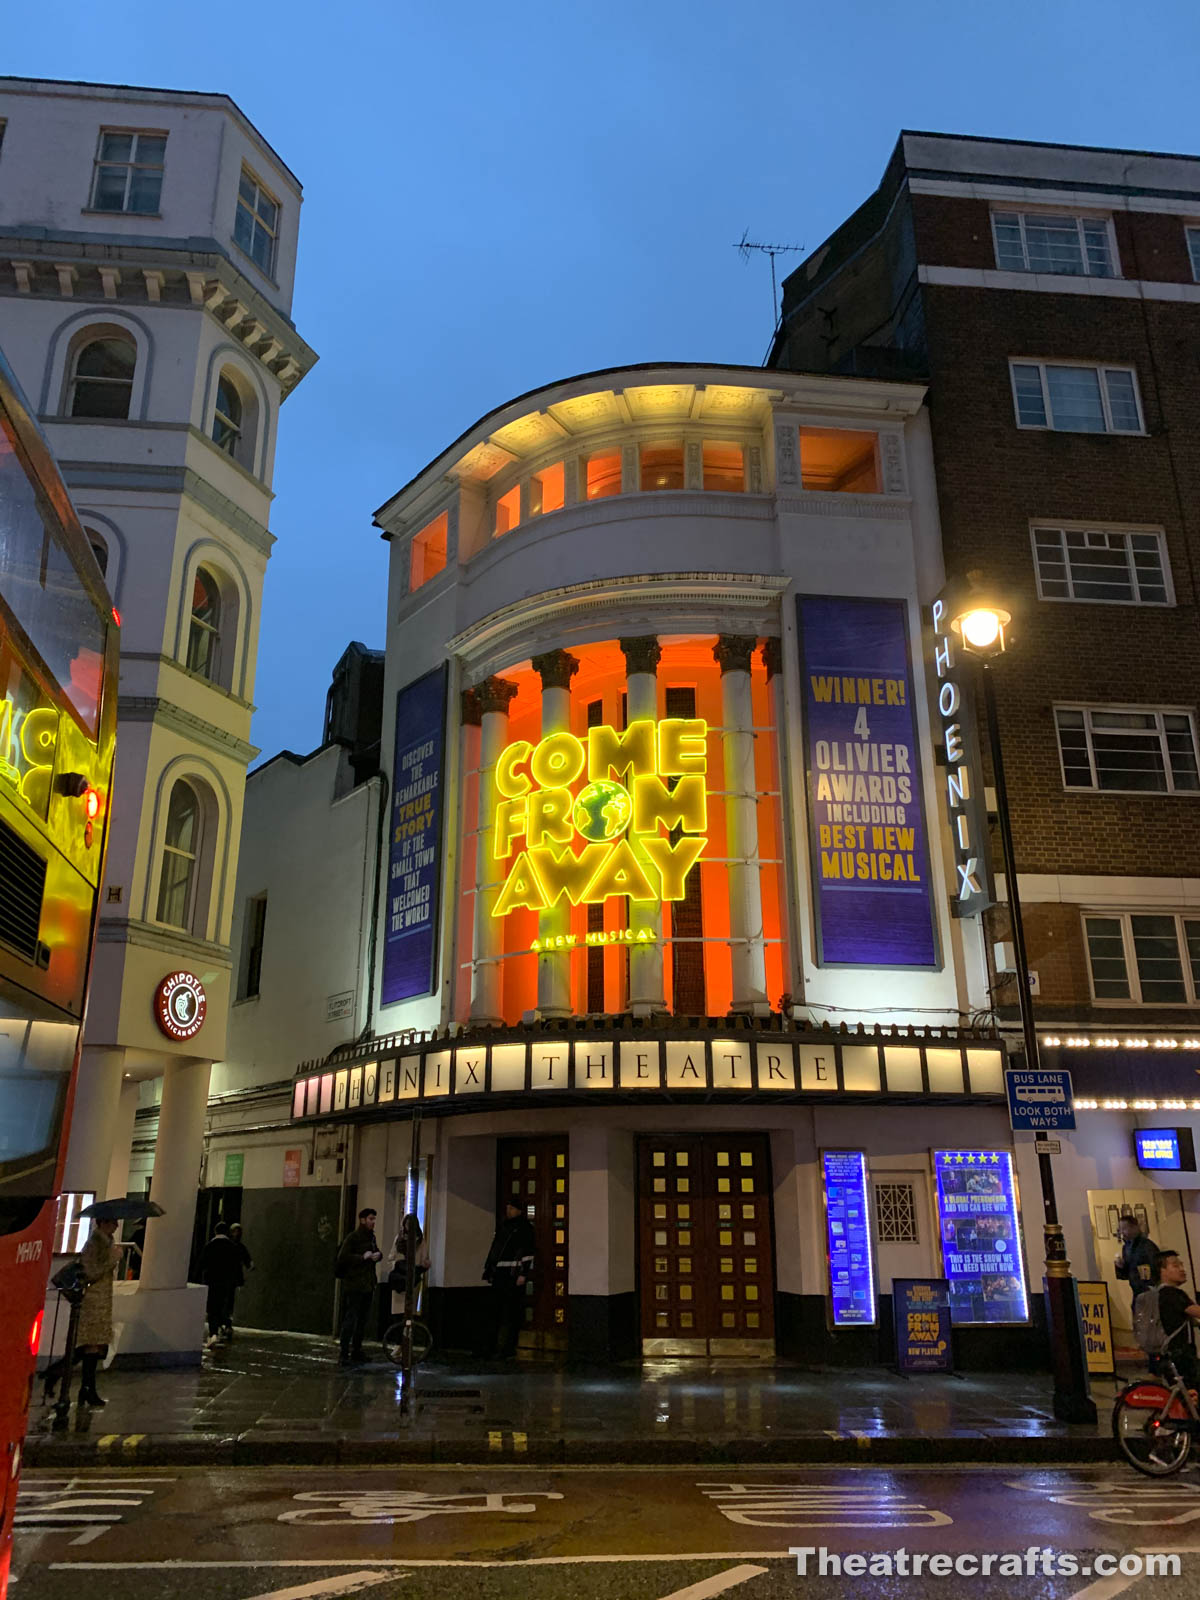 UK - London - Phoenix Theatre - Theatrecrafts.com